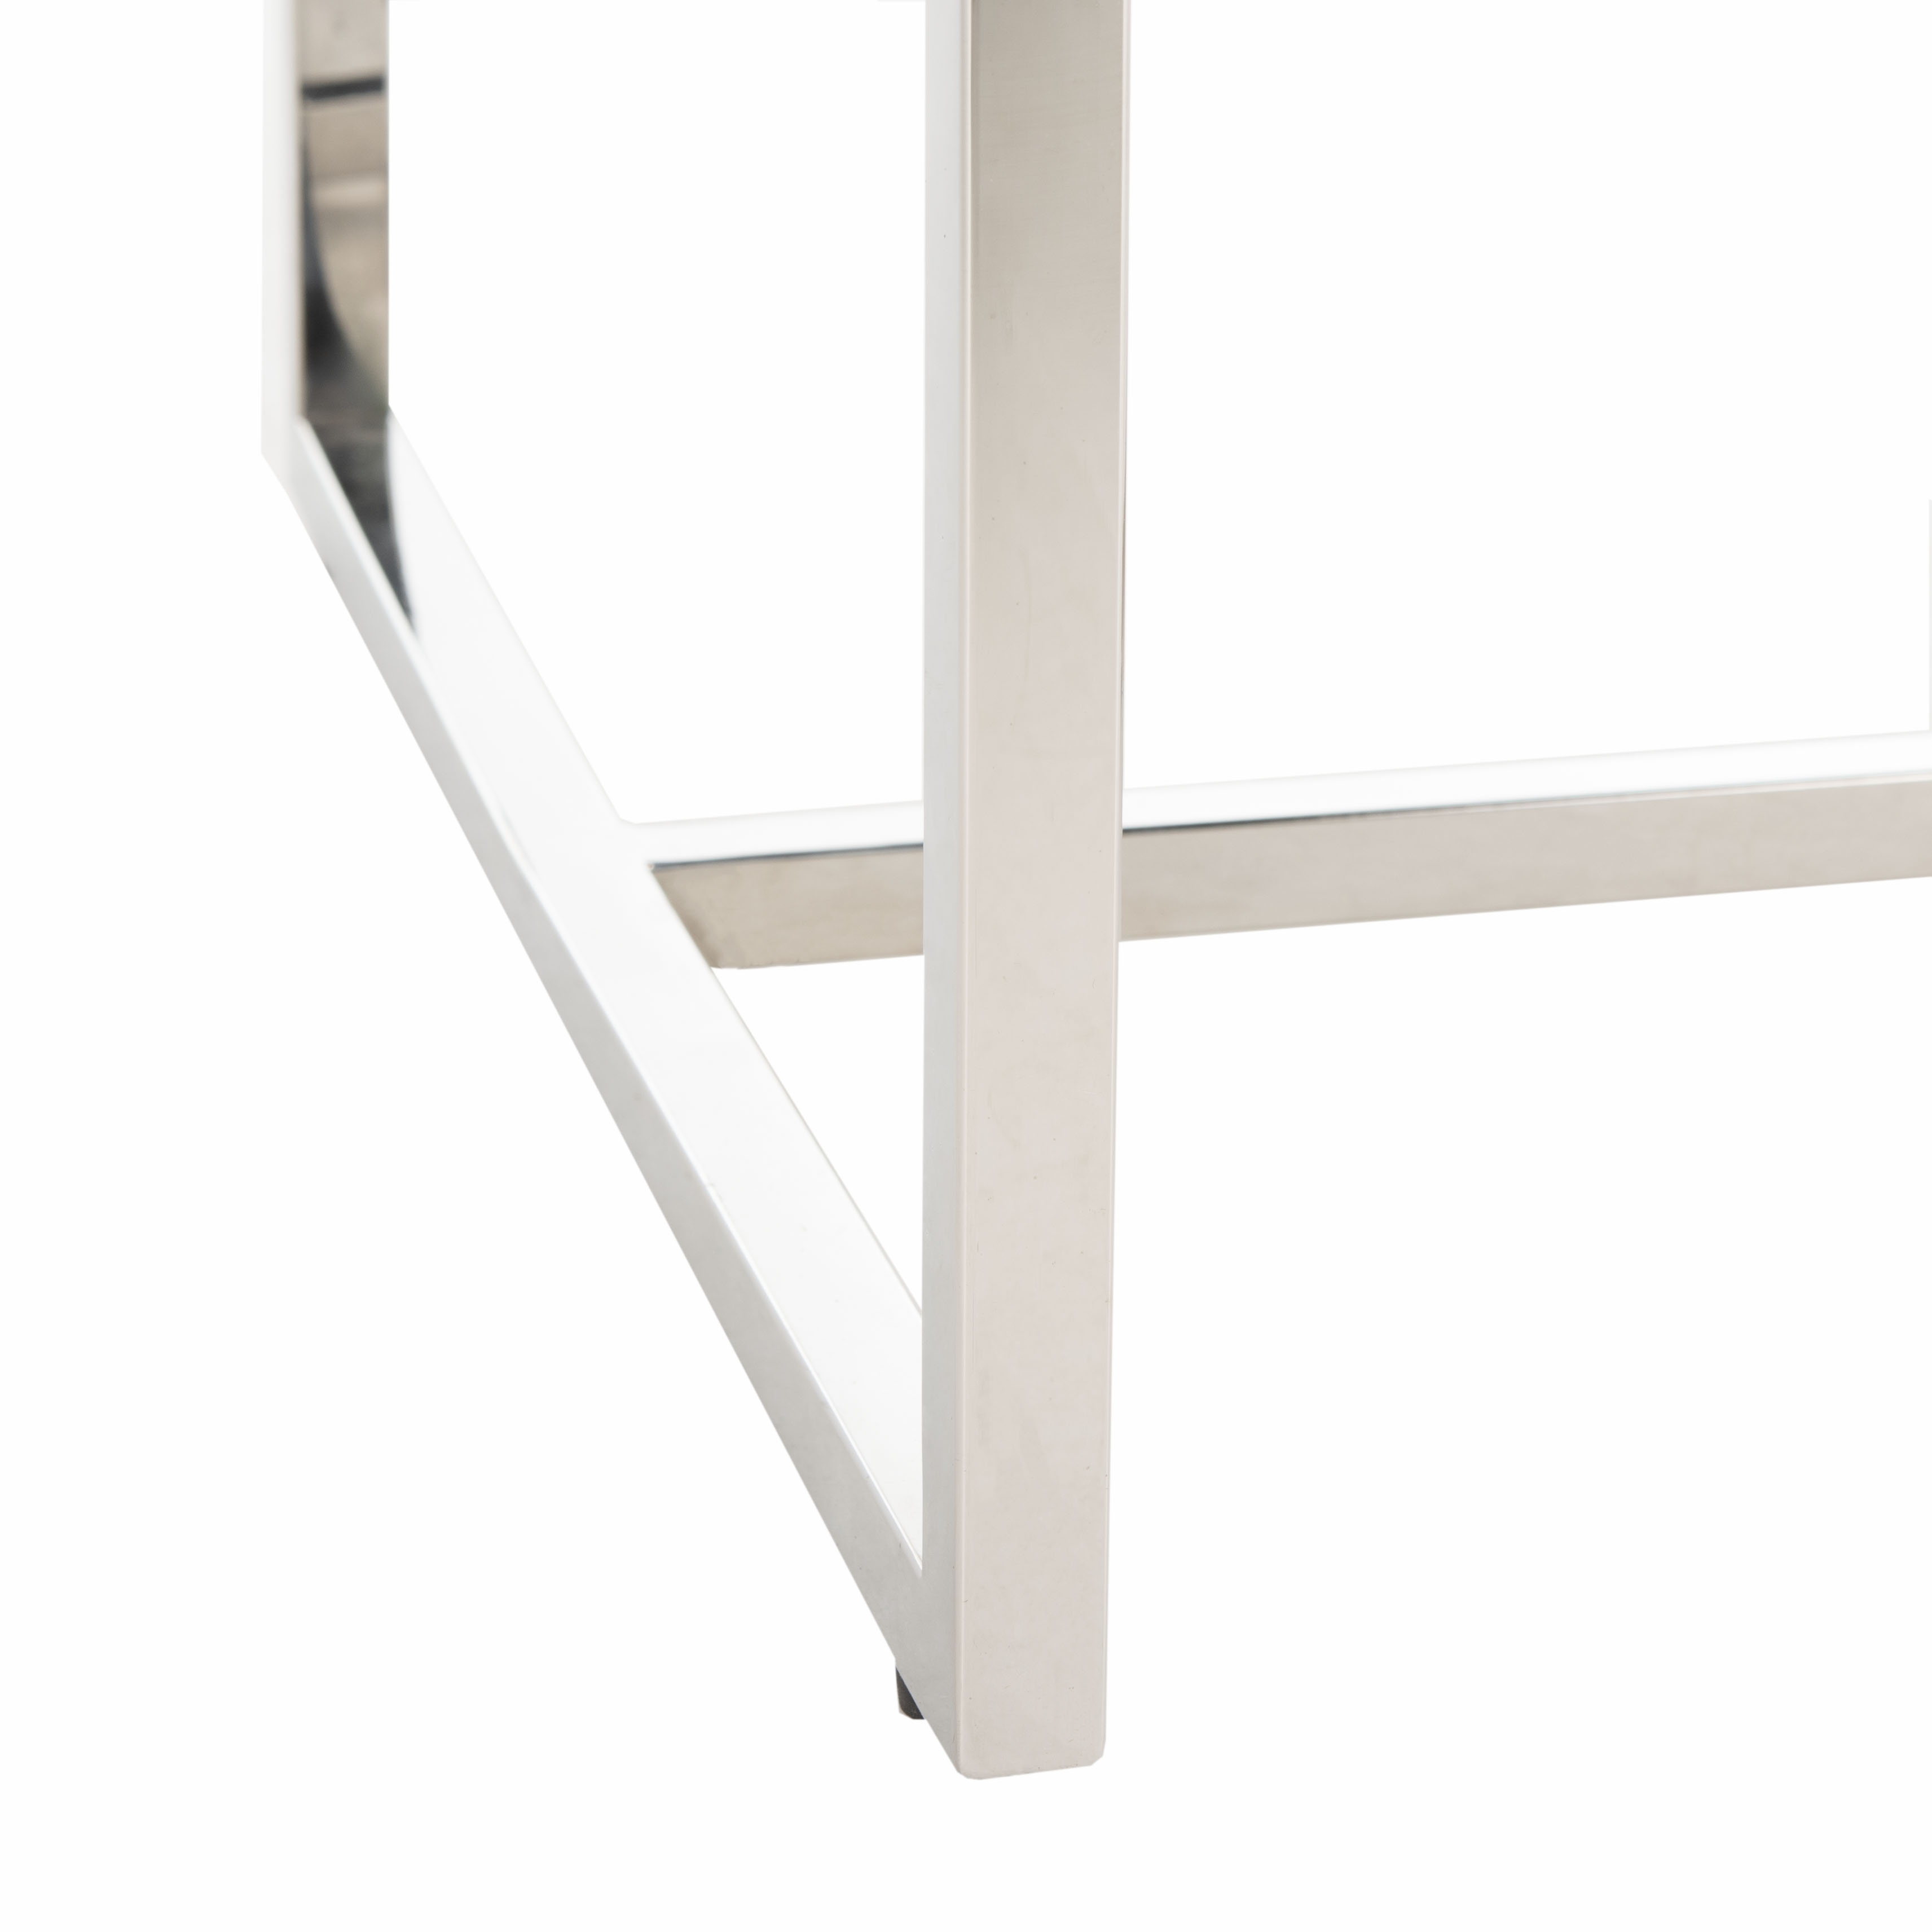 Lombardi Chrome Side Chair - Grey / White - Arlo Home - Image 6